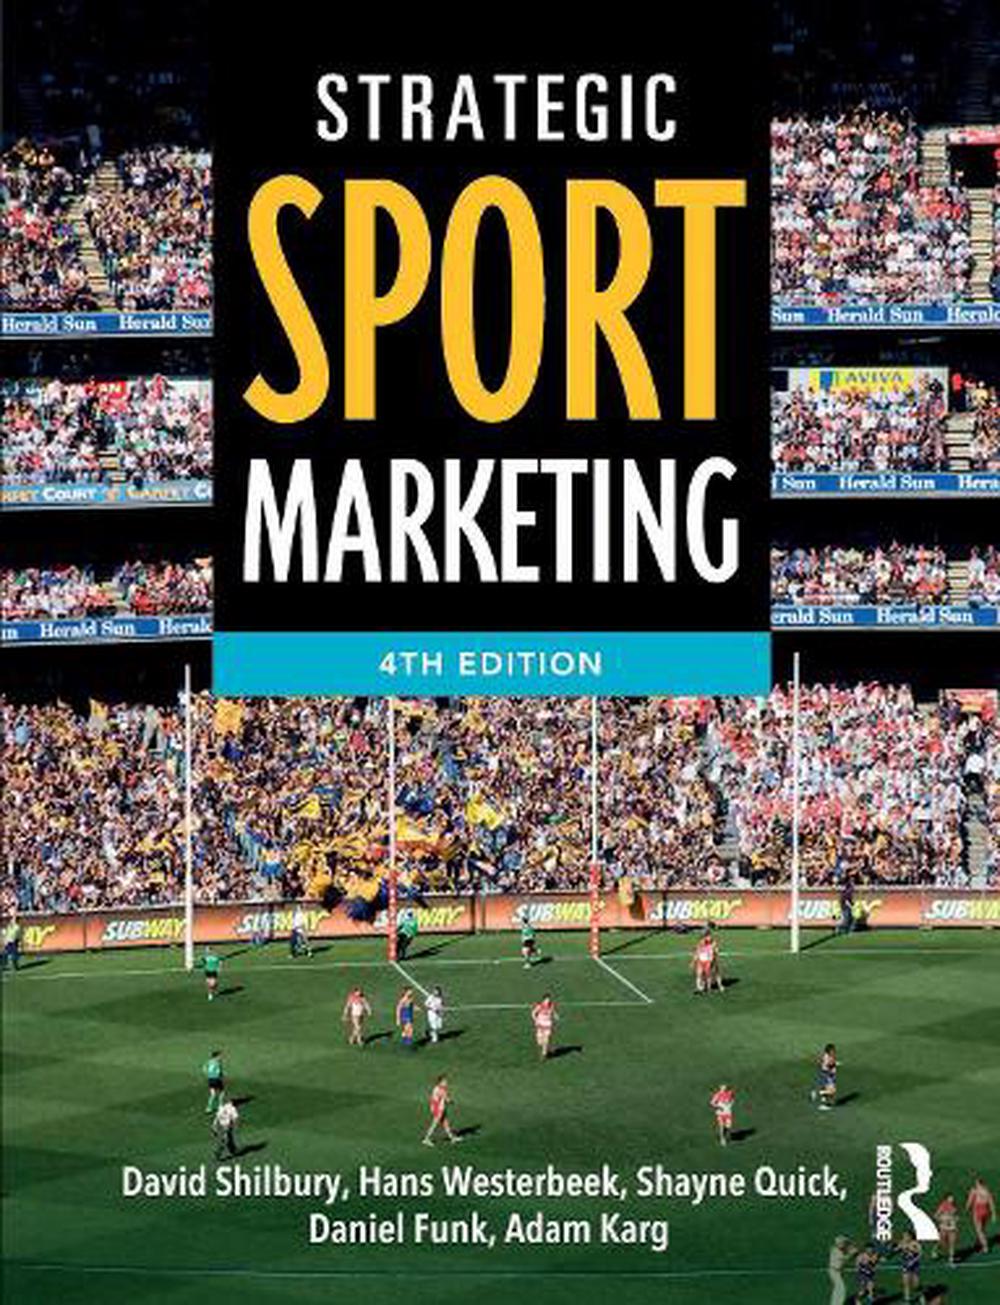 Strategic Sport Marketing, 4th Edition by David Shilbury, Paperback